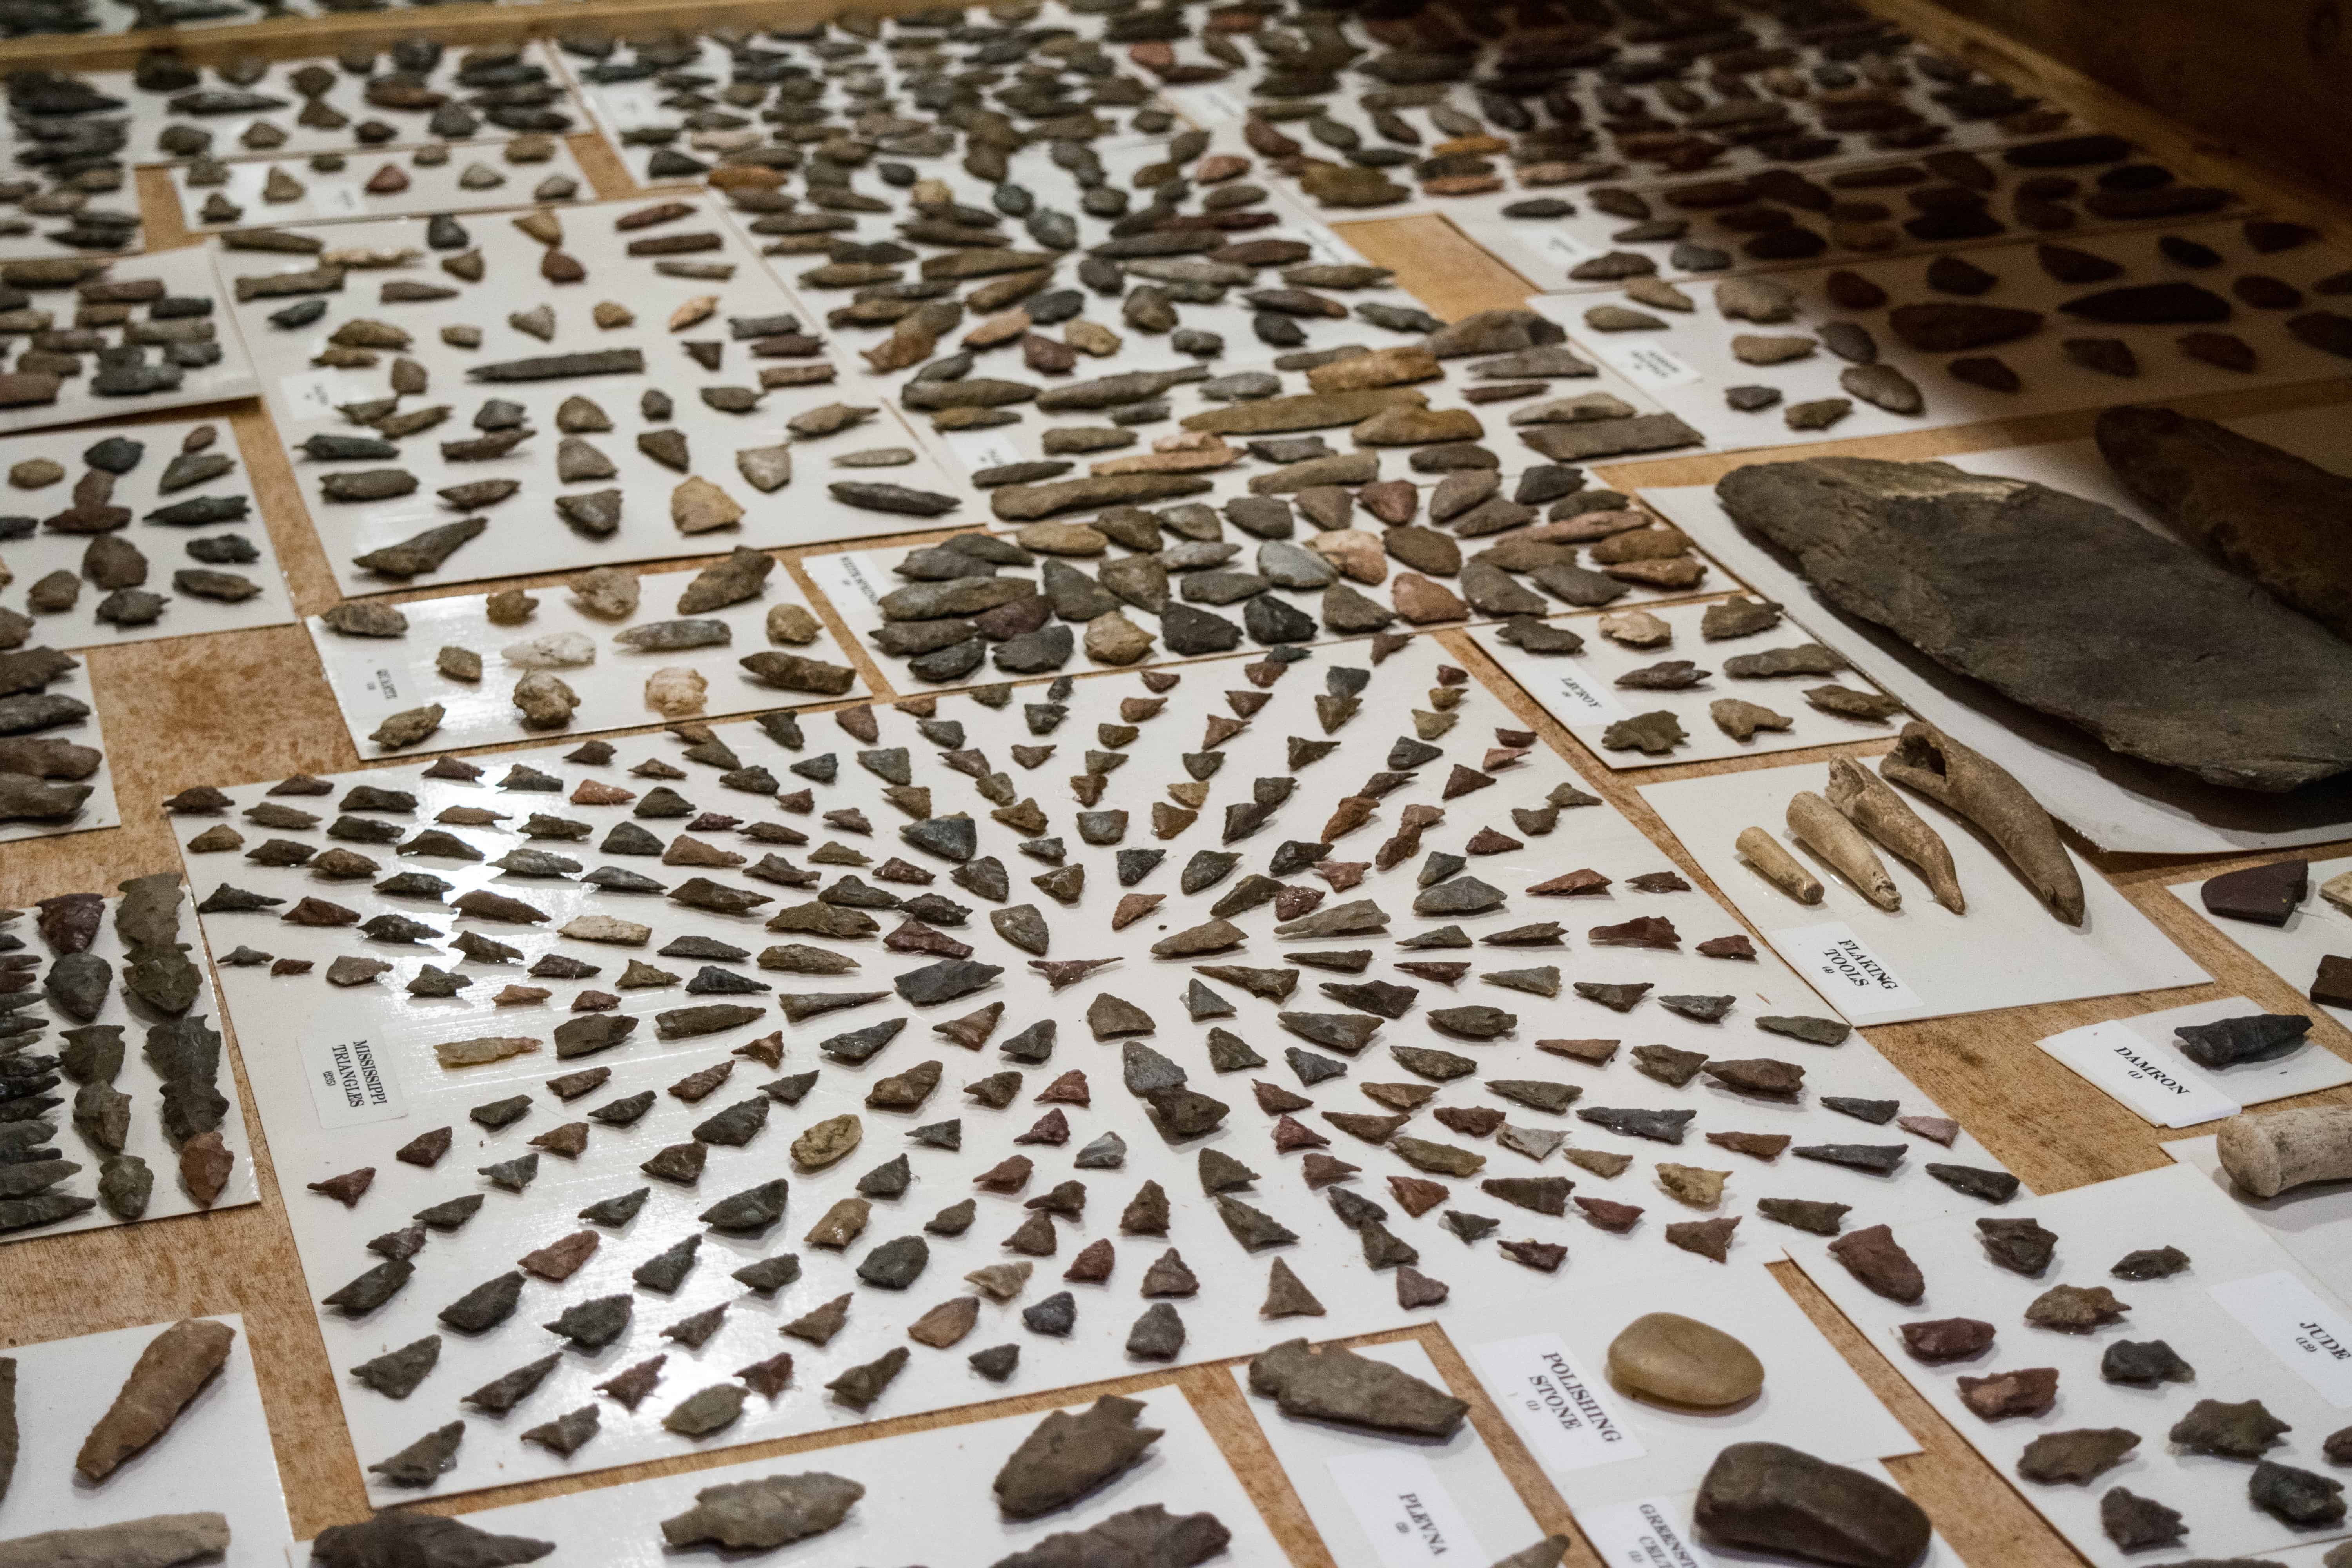 Oakville Indian Mounds Museum arrowhead collection